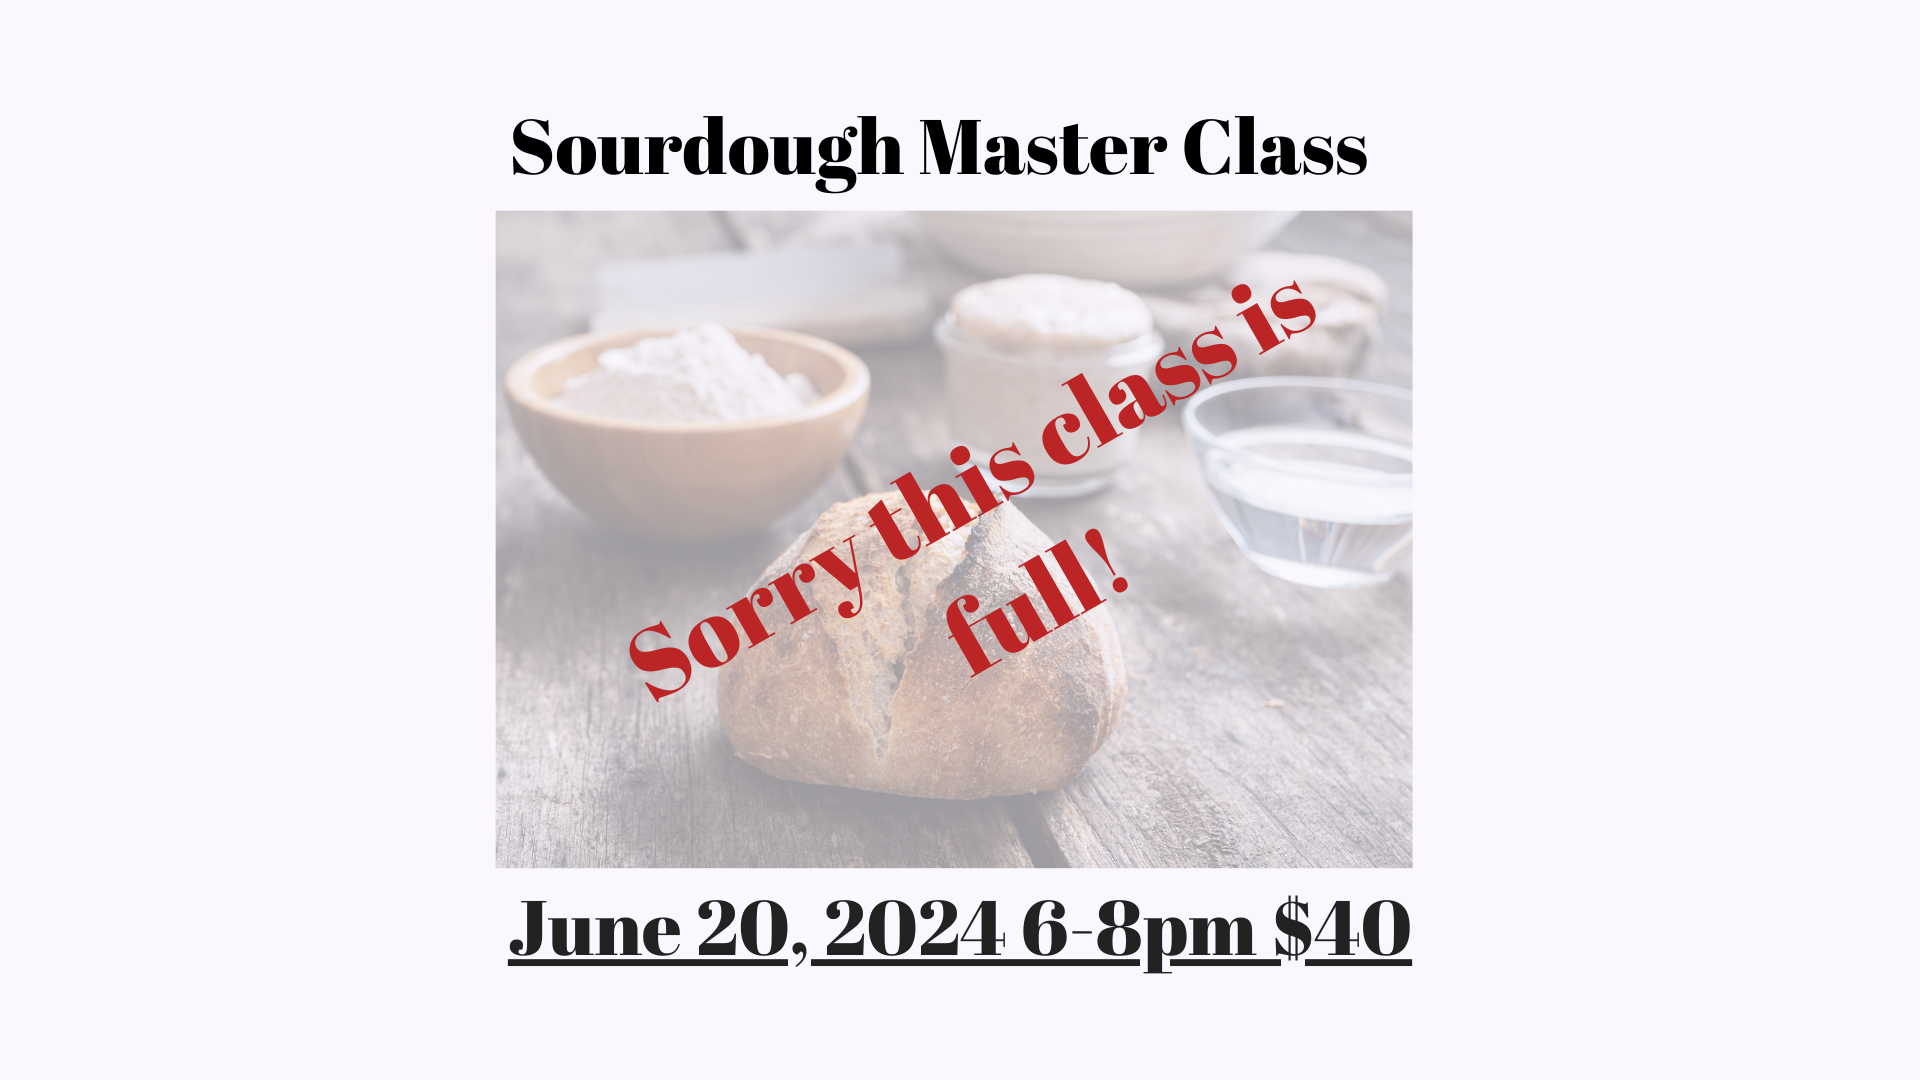 Sourdough Master Class June 20, 2024 6-8 pm $40